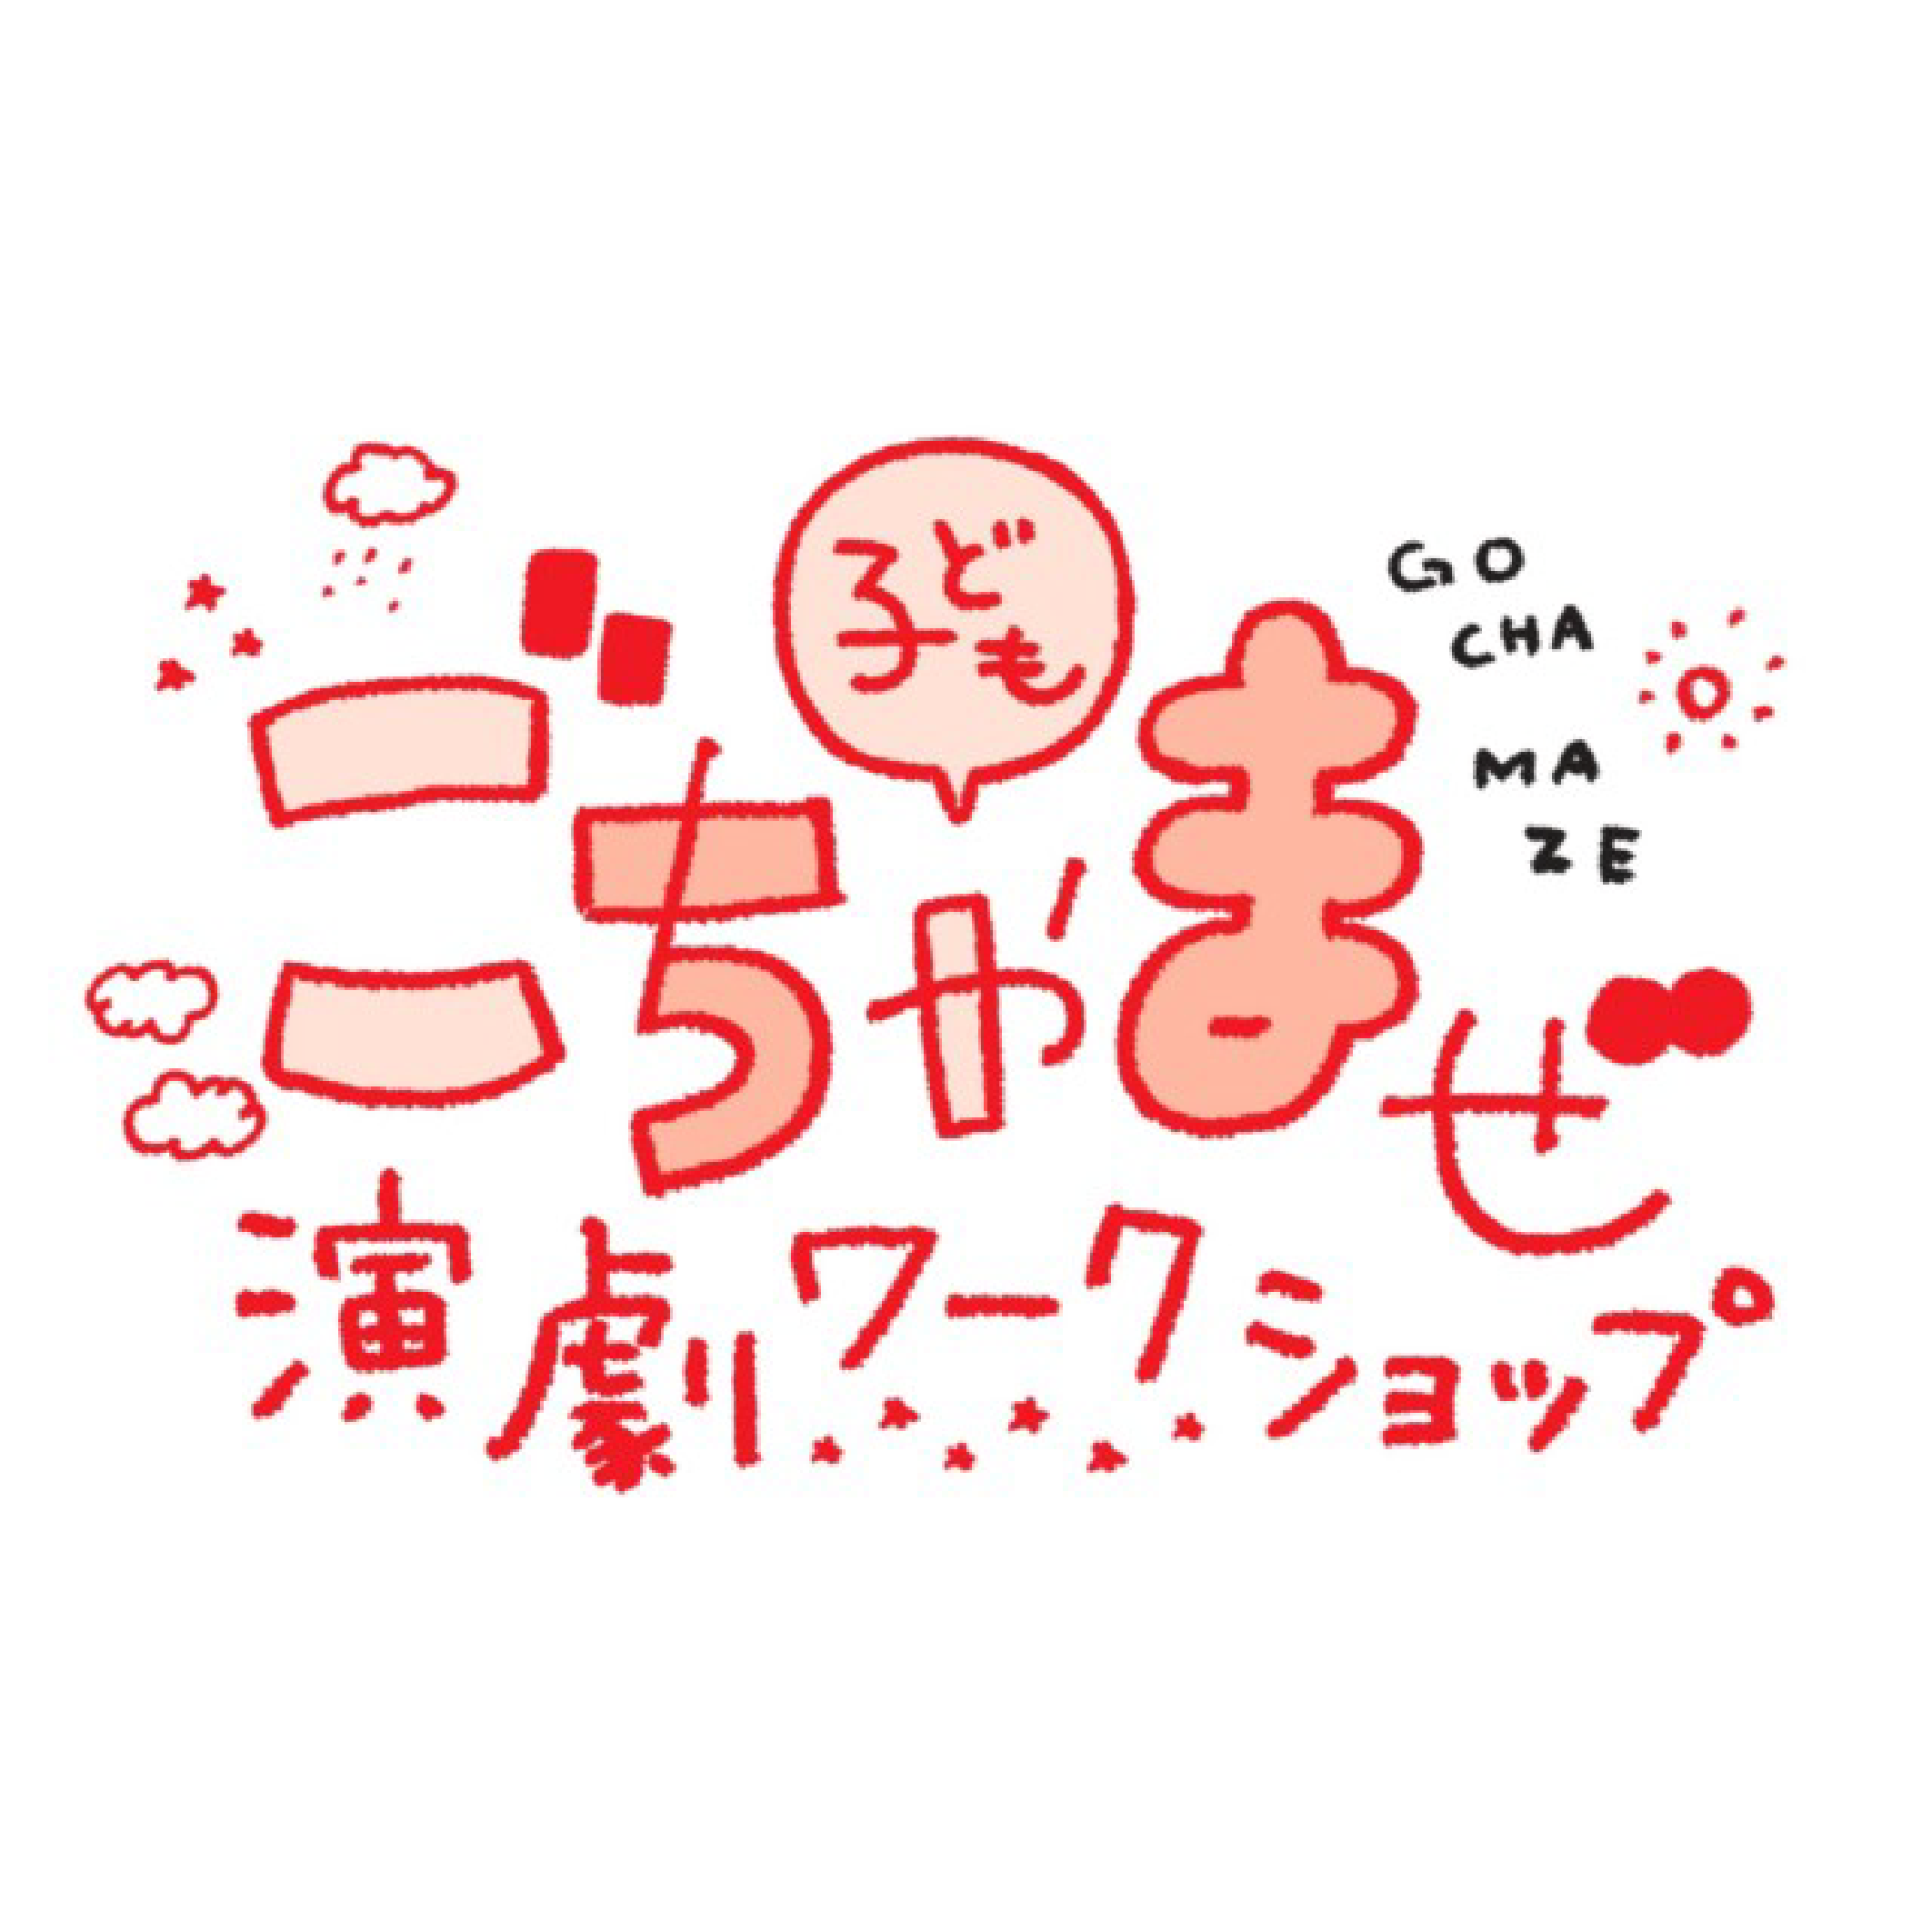 “Children’s Mixed Drama Workshop: March’s Aiueo Walk♪ Edition”